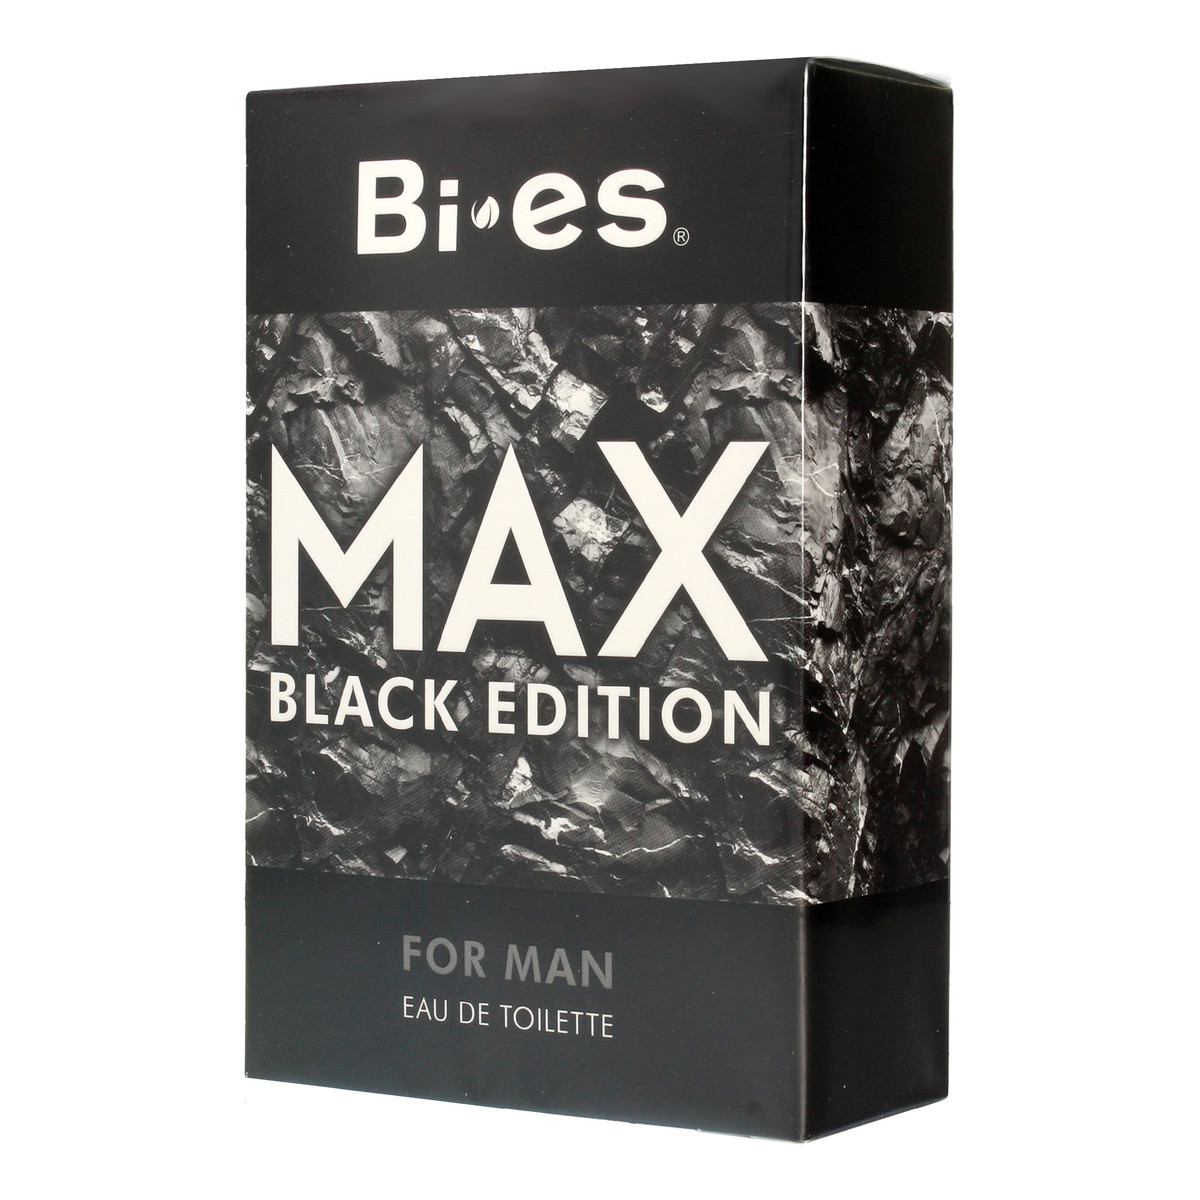 Bi-es Max Black Edition for men Woda toaletowa 100ml